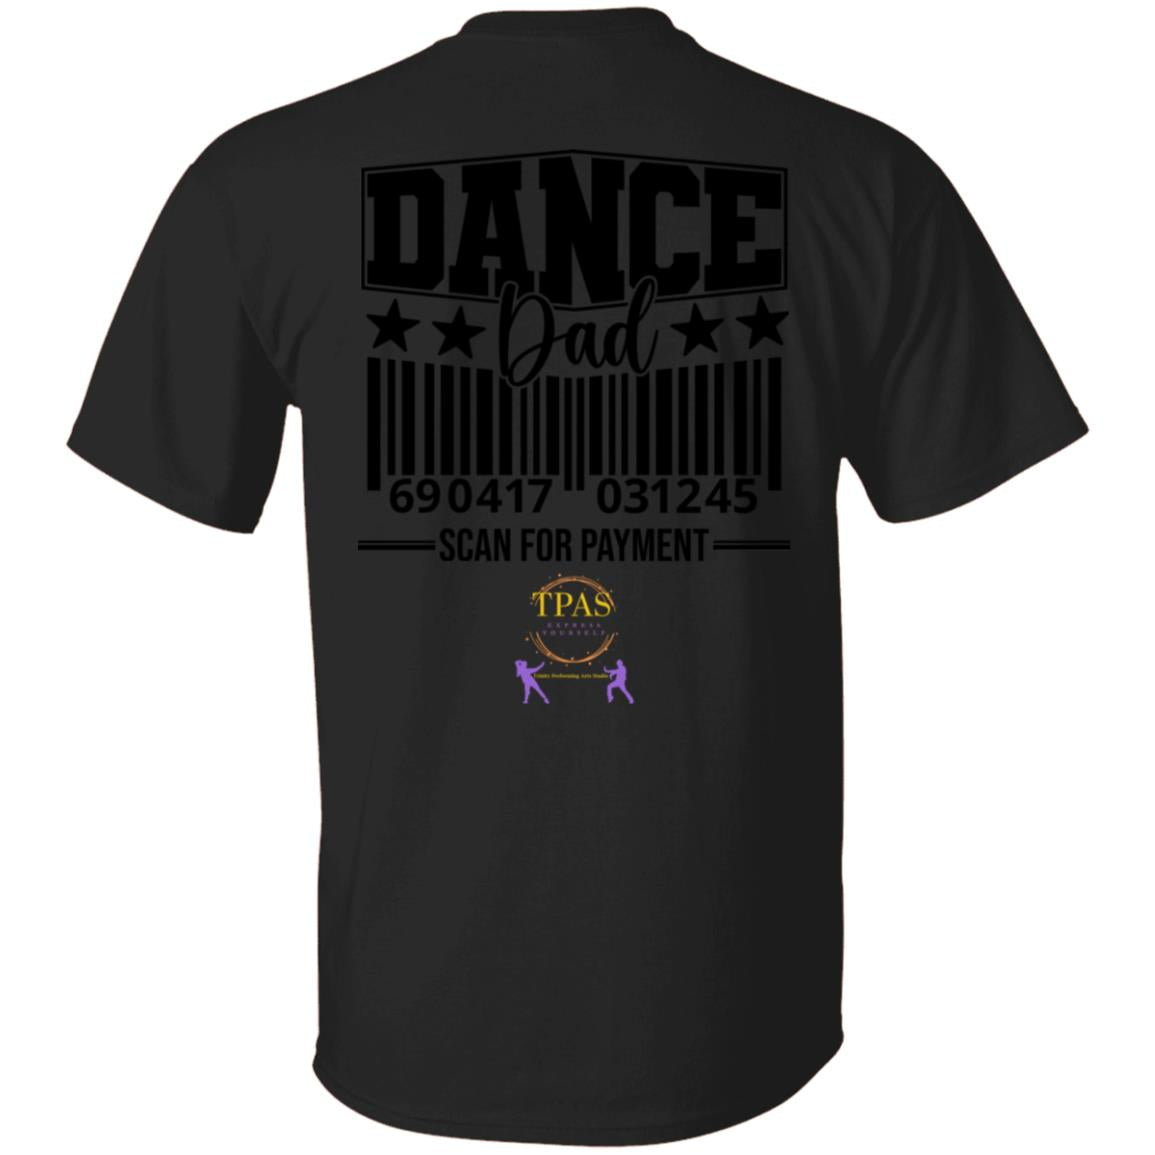 TPAS Dance Dad Scan for Payment 100% Cotton T-Shirt